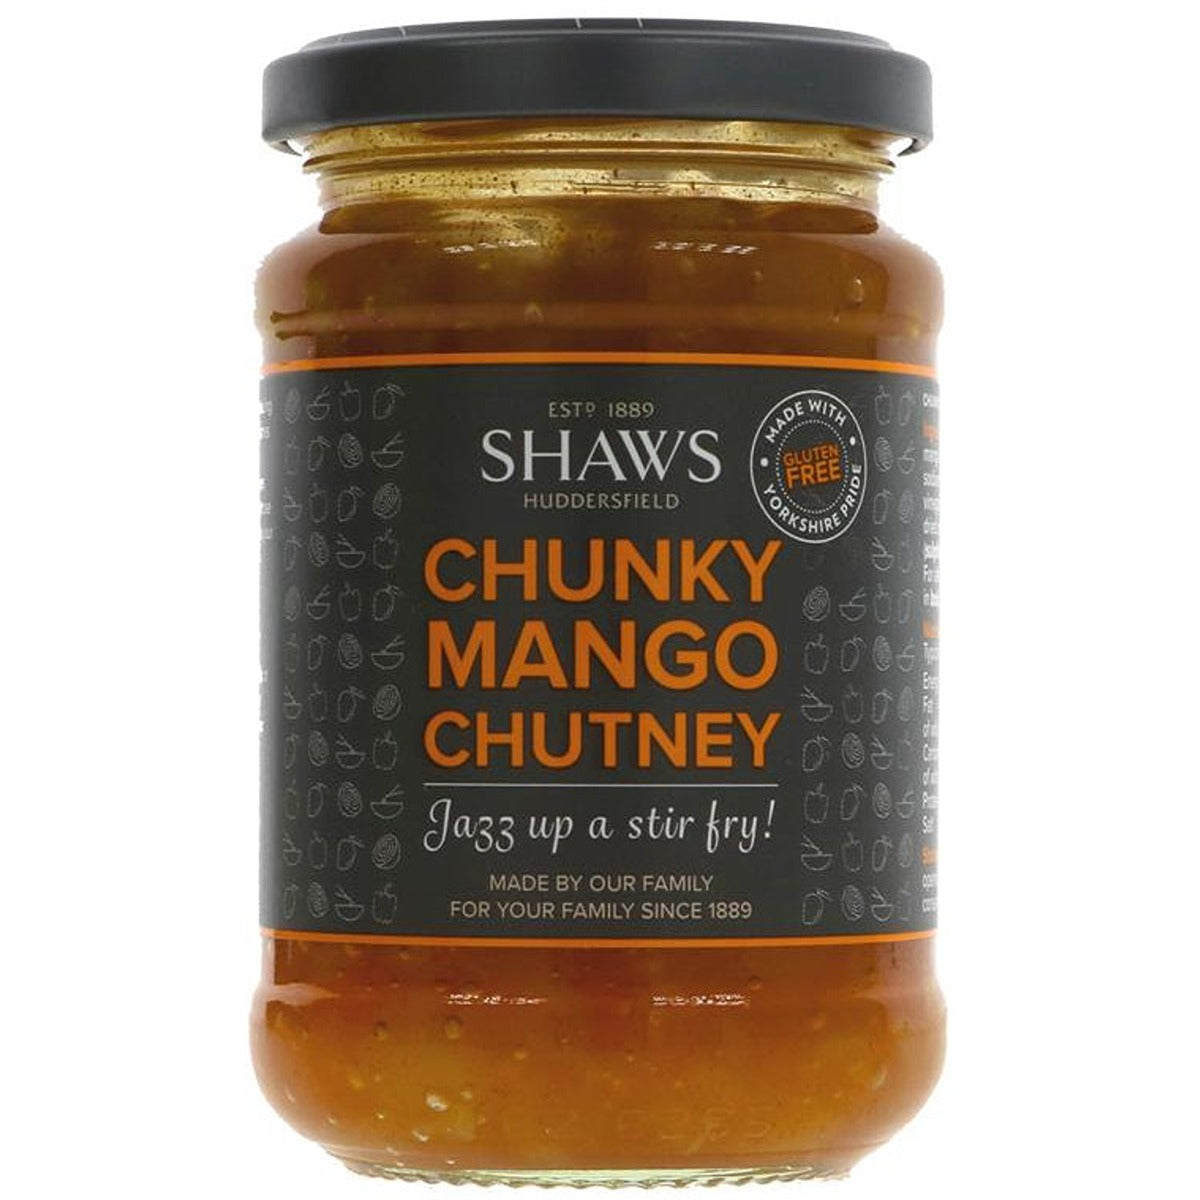 Shaws - Chunky Mango Chutney - 300g - Continental Food Store